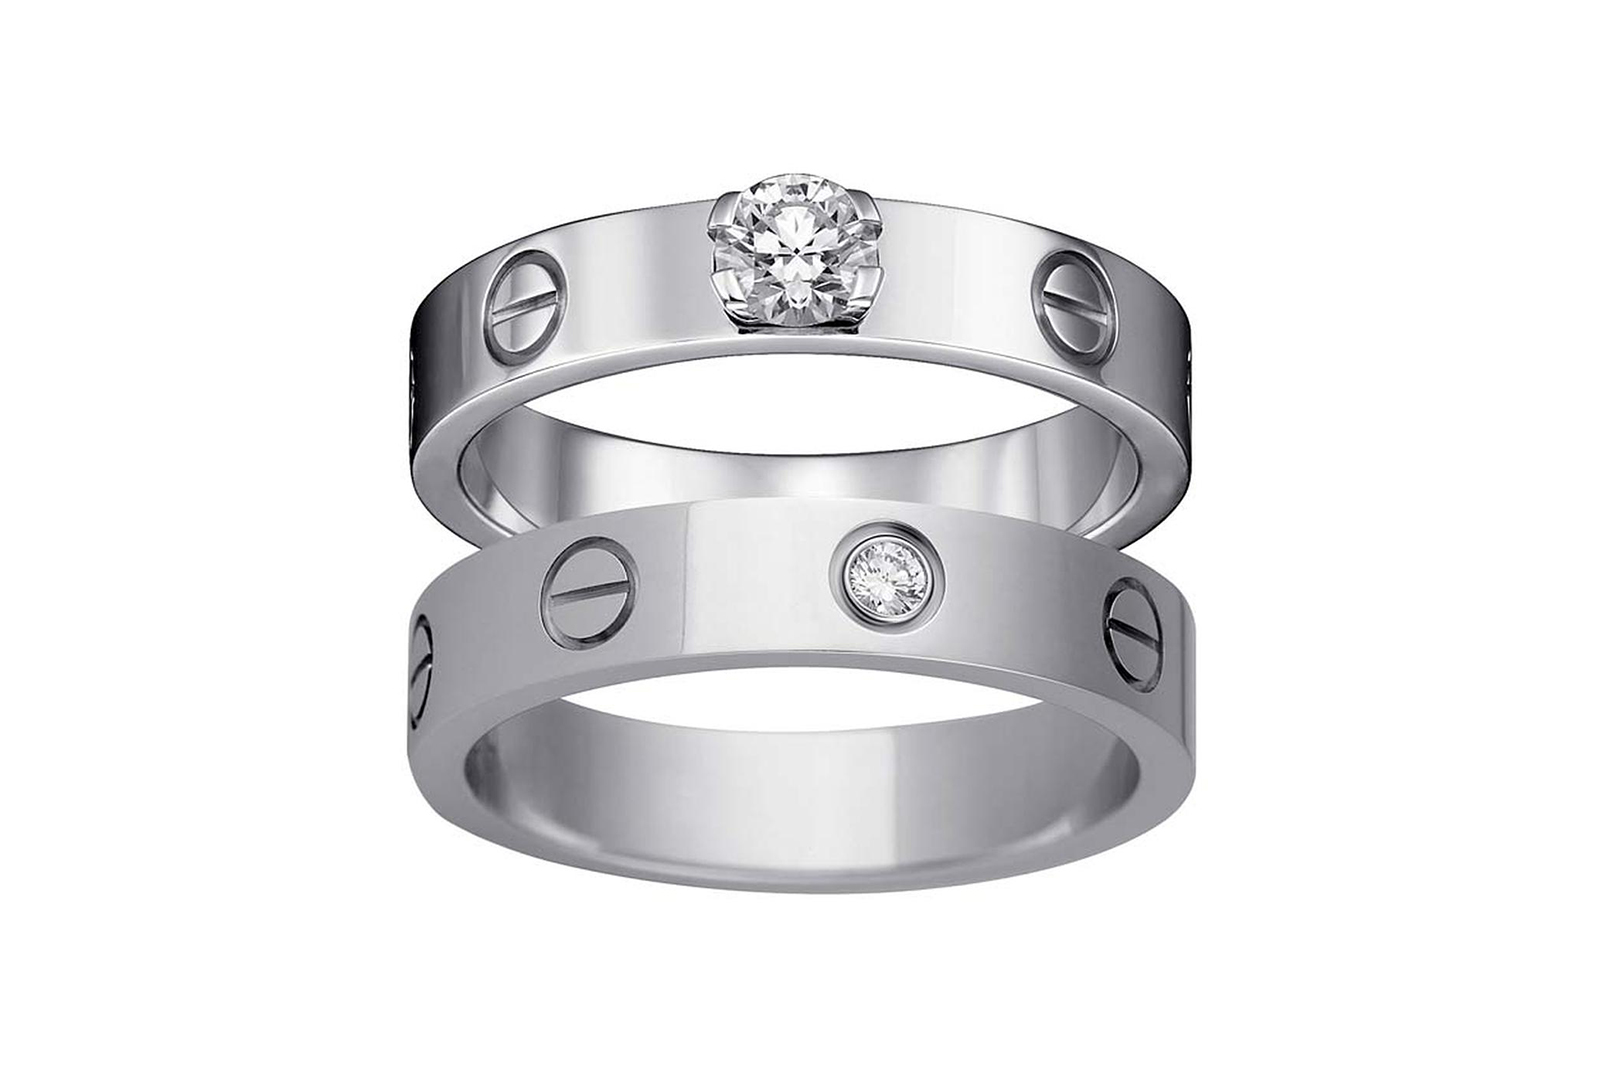 rings similar to cartier